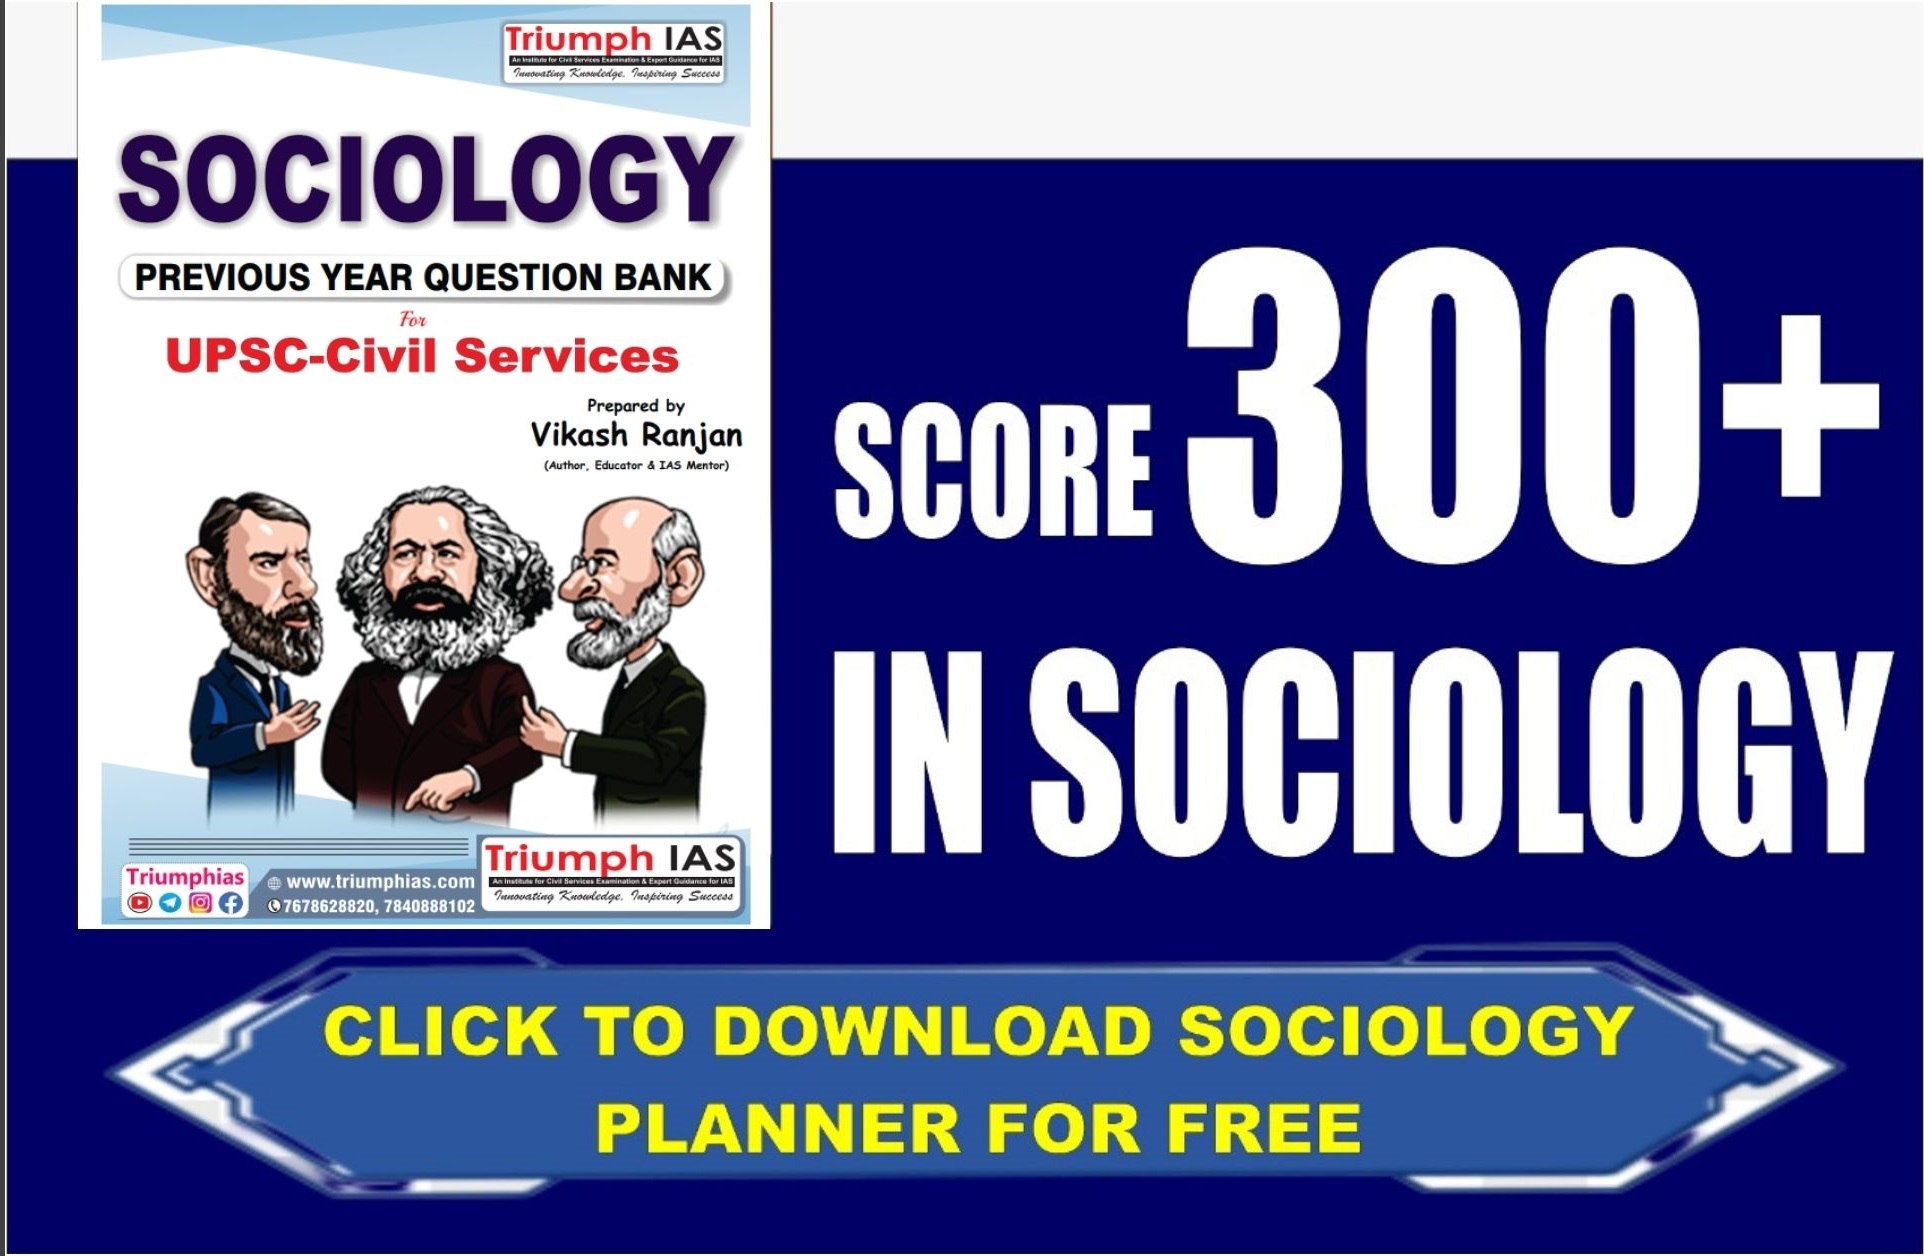 Sociology-Planner